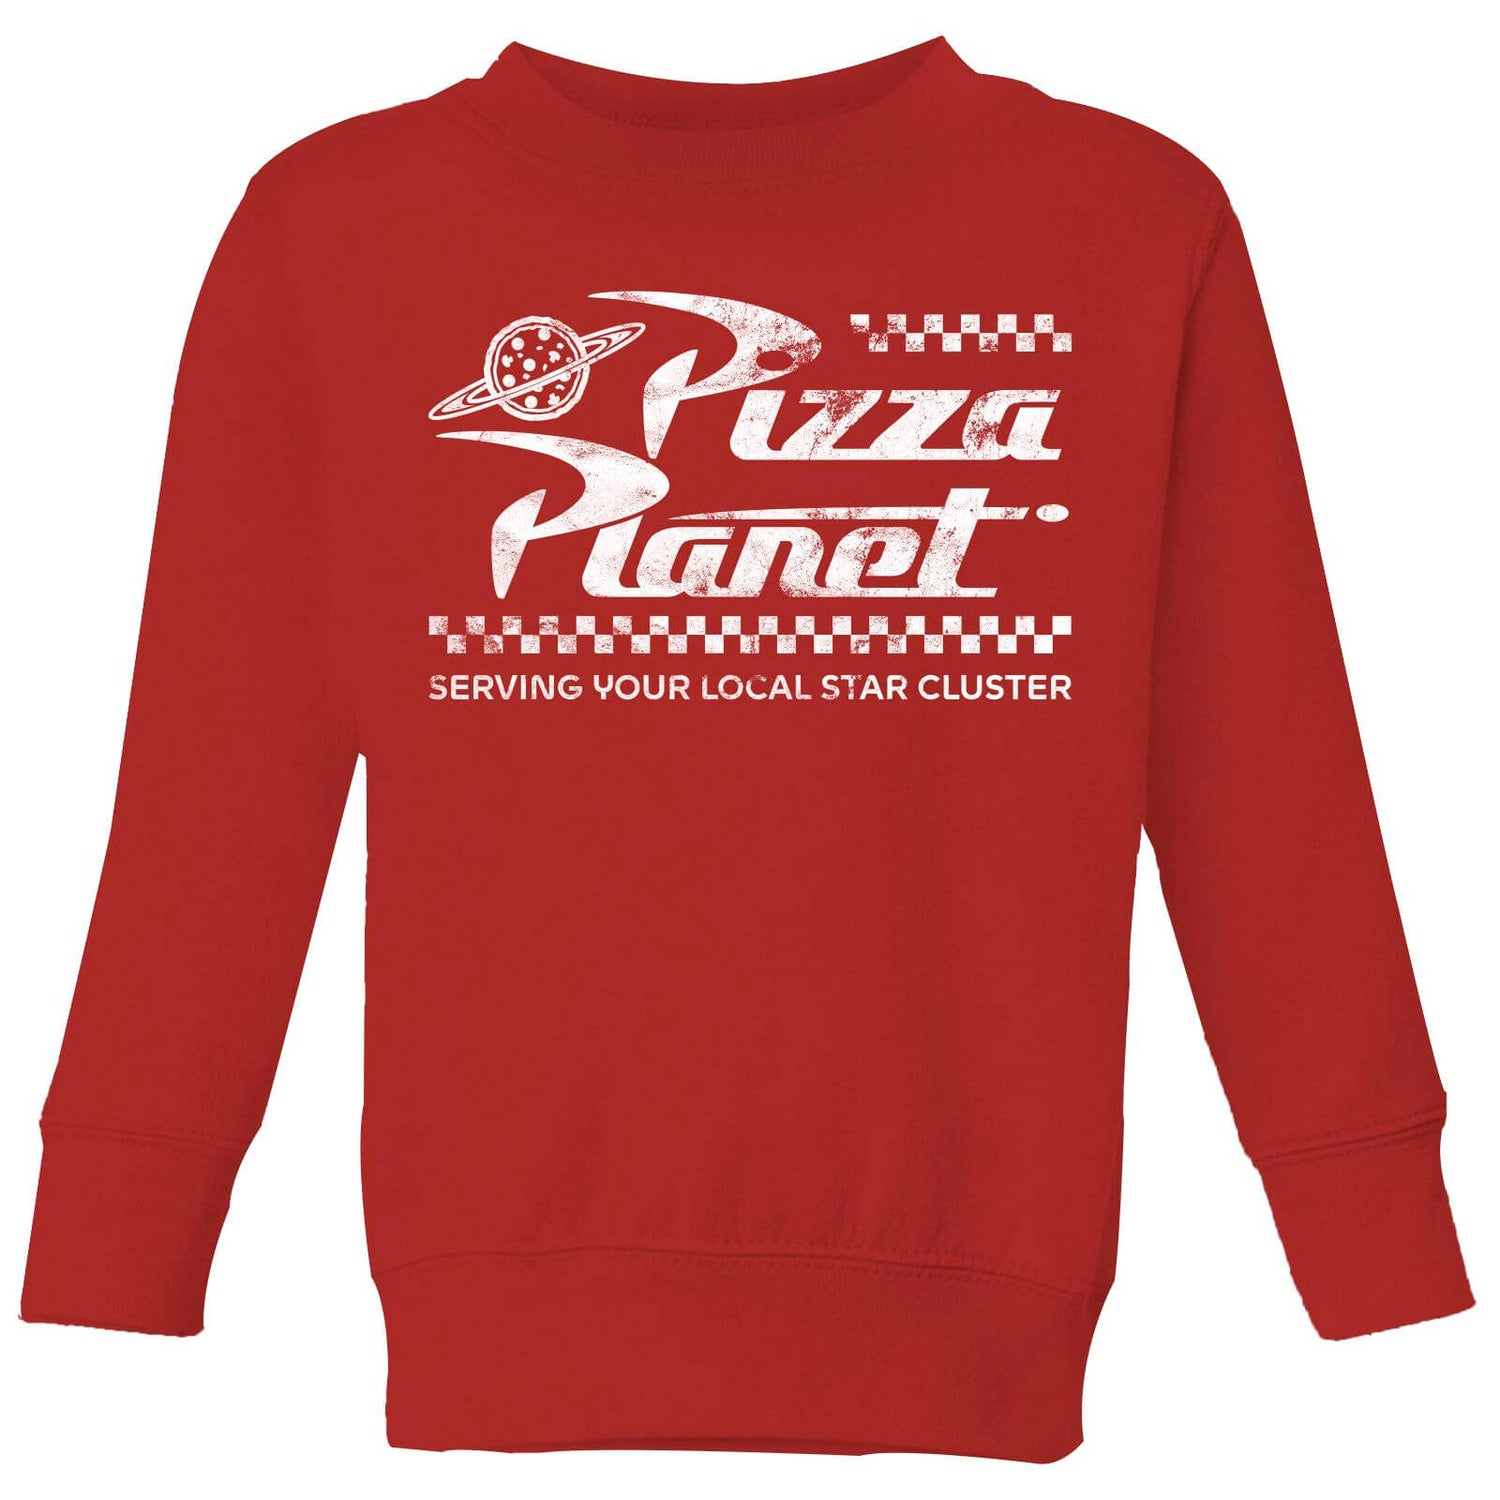 Toy Story x Pizza Planet Crew Kids' Sweatshirt - Red